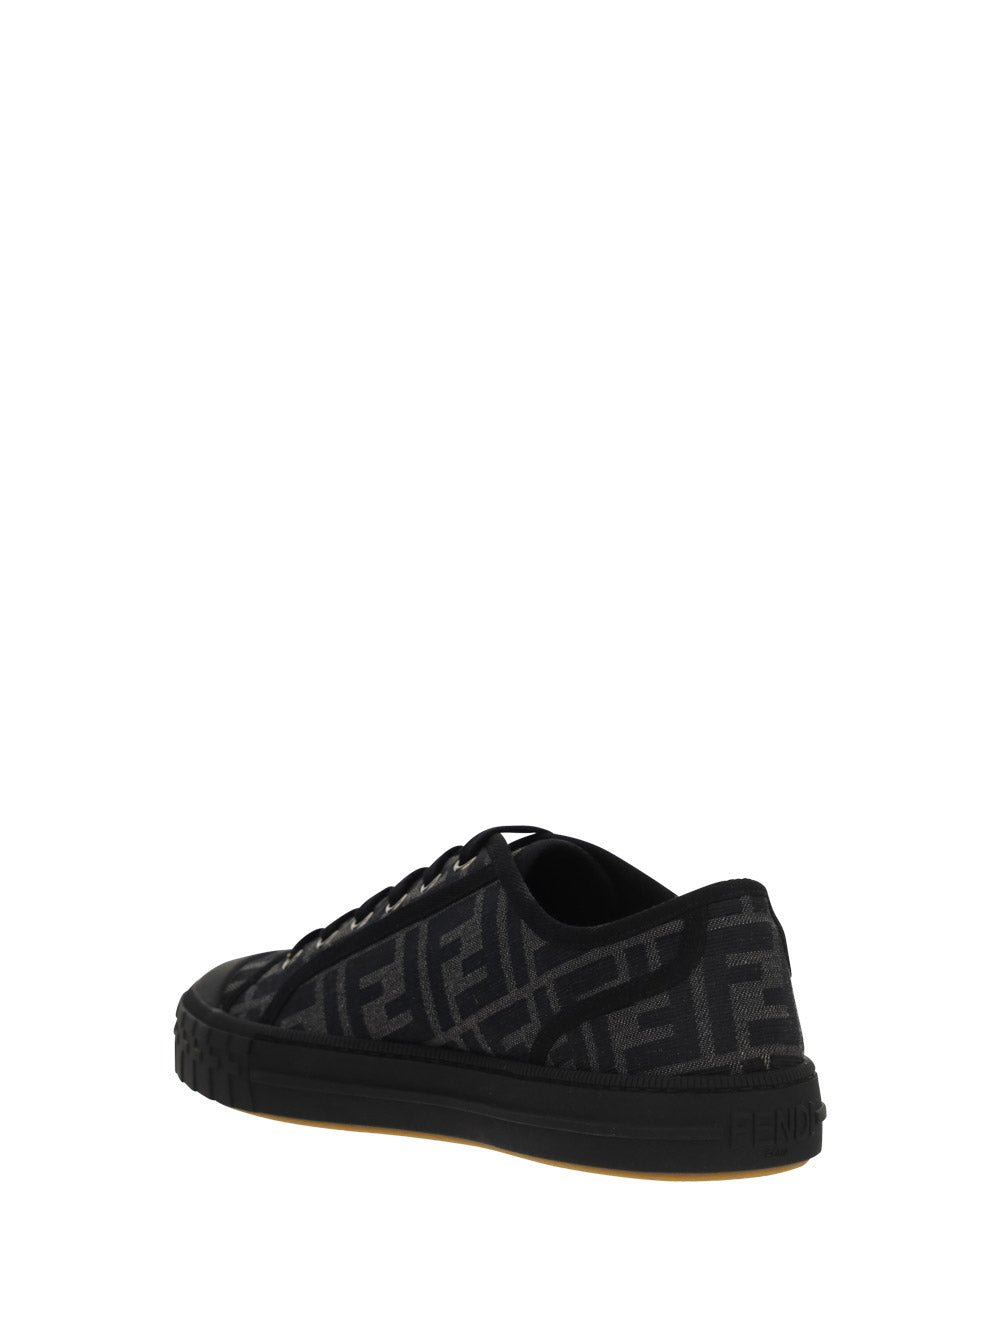 Domino Low Top Sneakers - Black